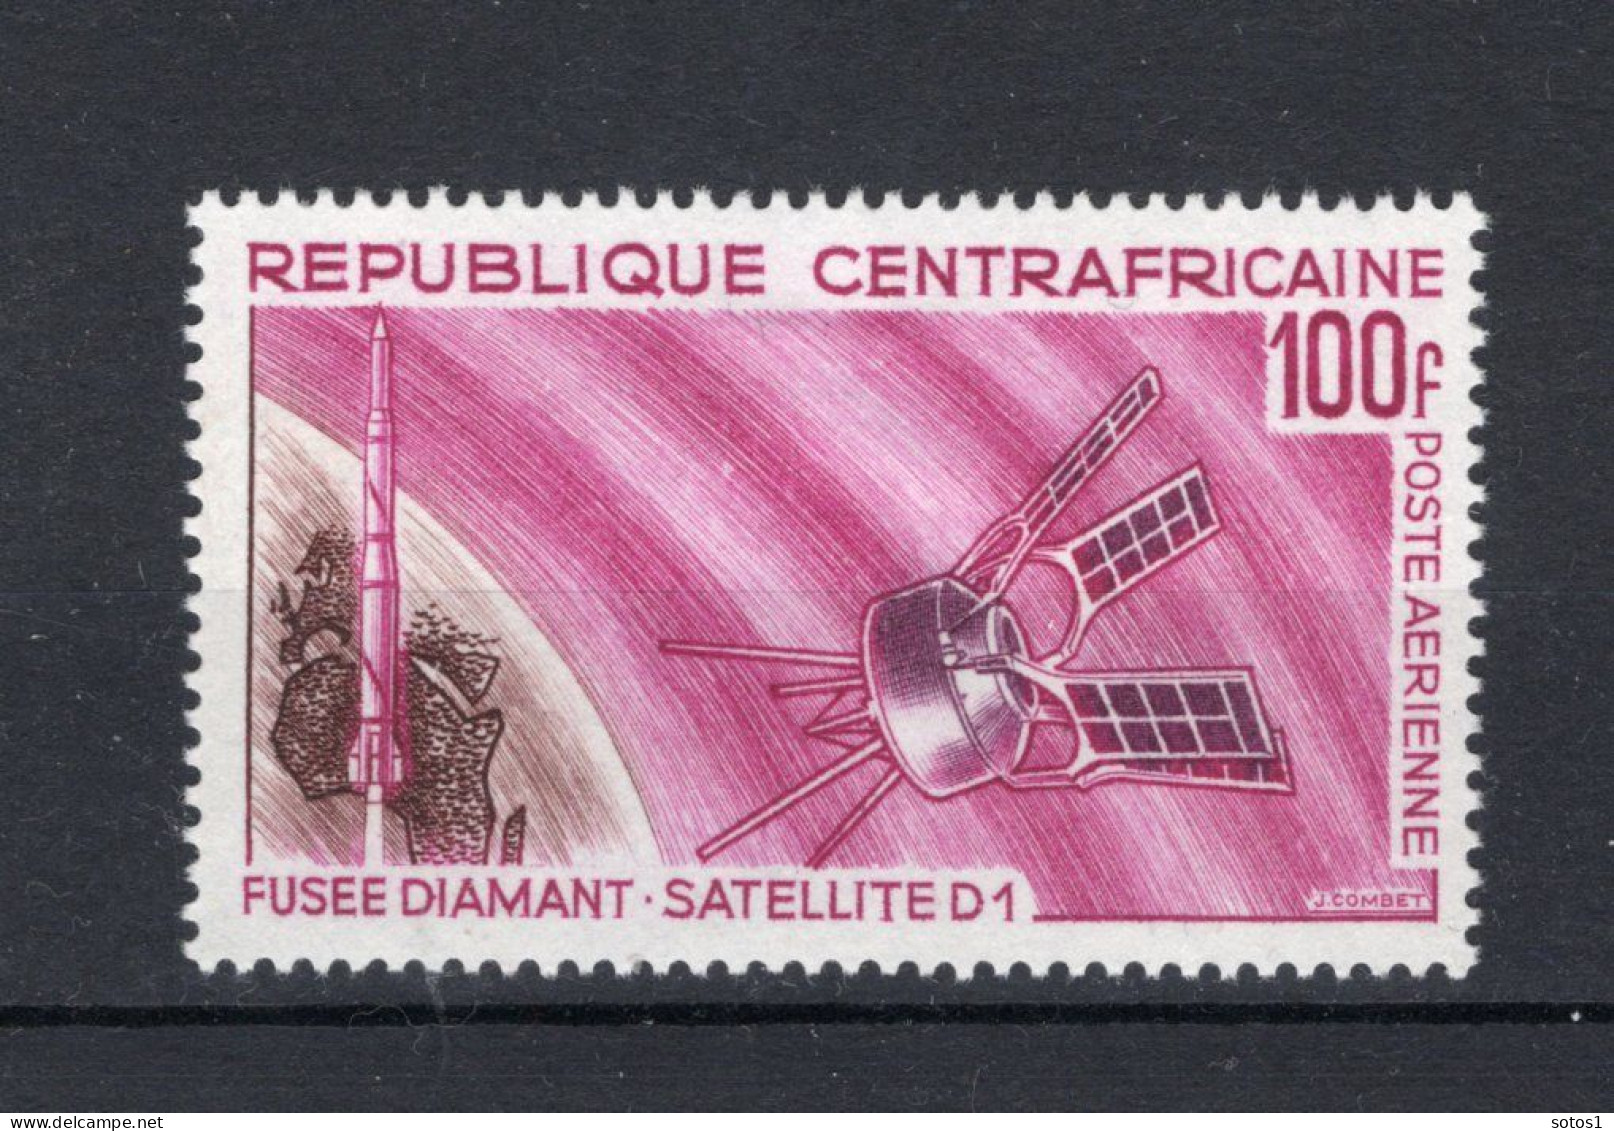 CENTRAFRICAINE Yt. PA45 MH Luchtpost 1966 - Centrafricaine (République)